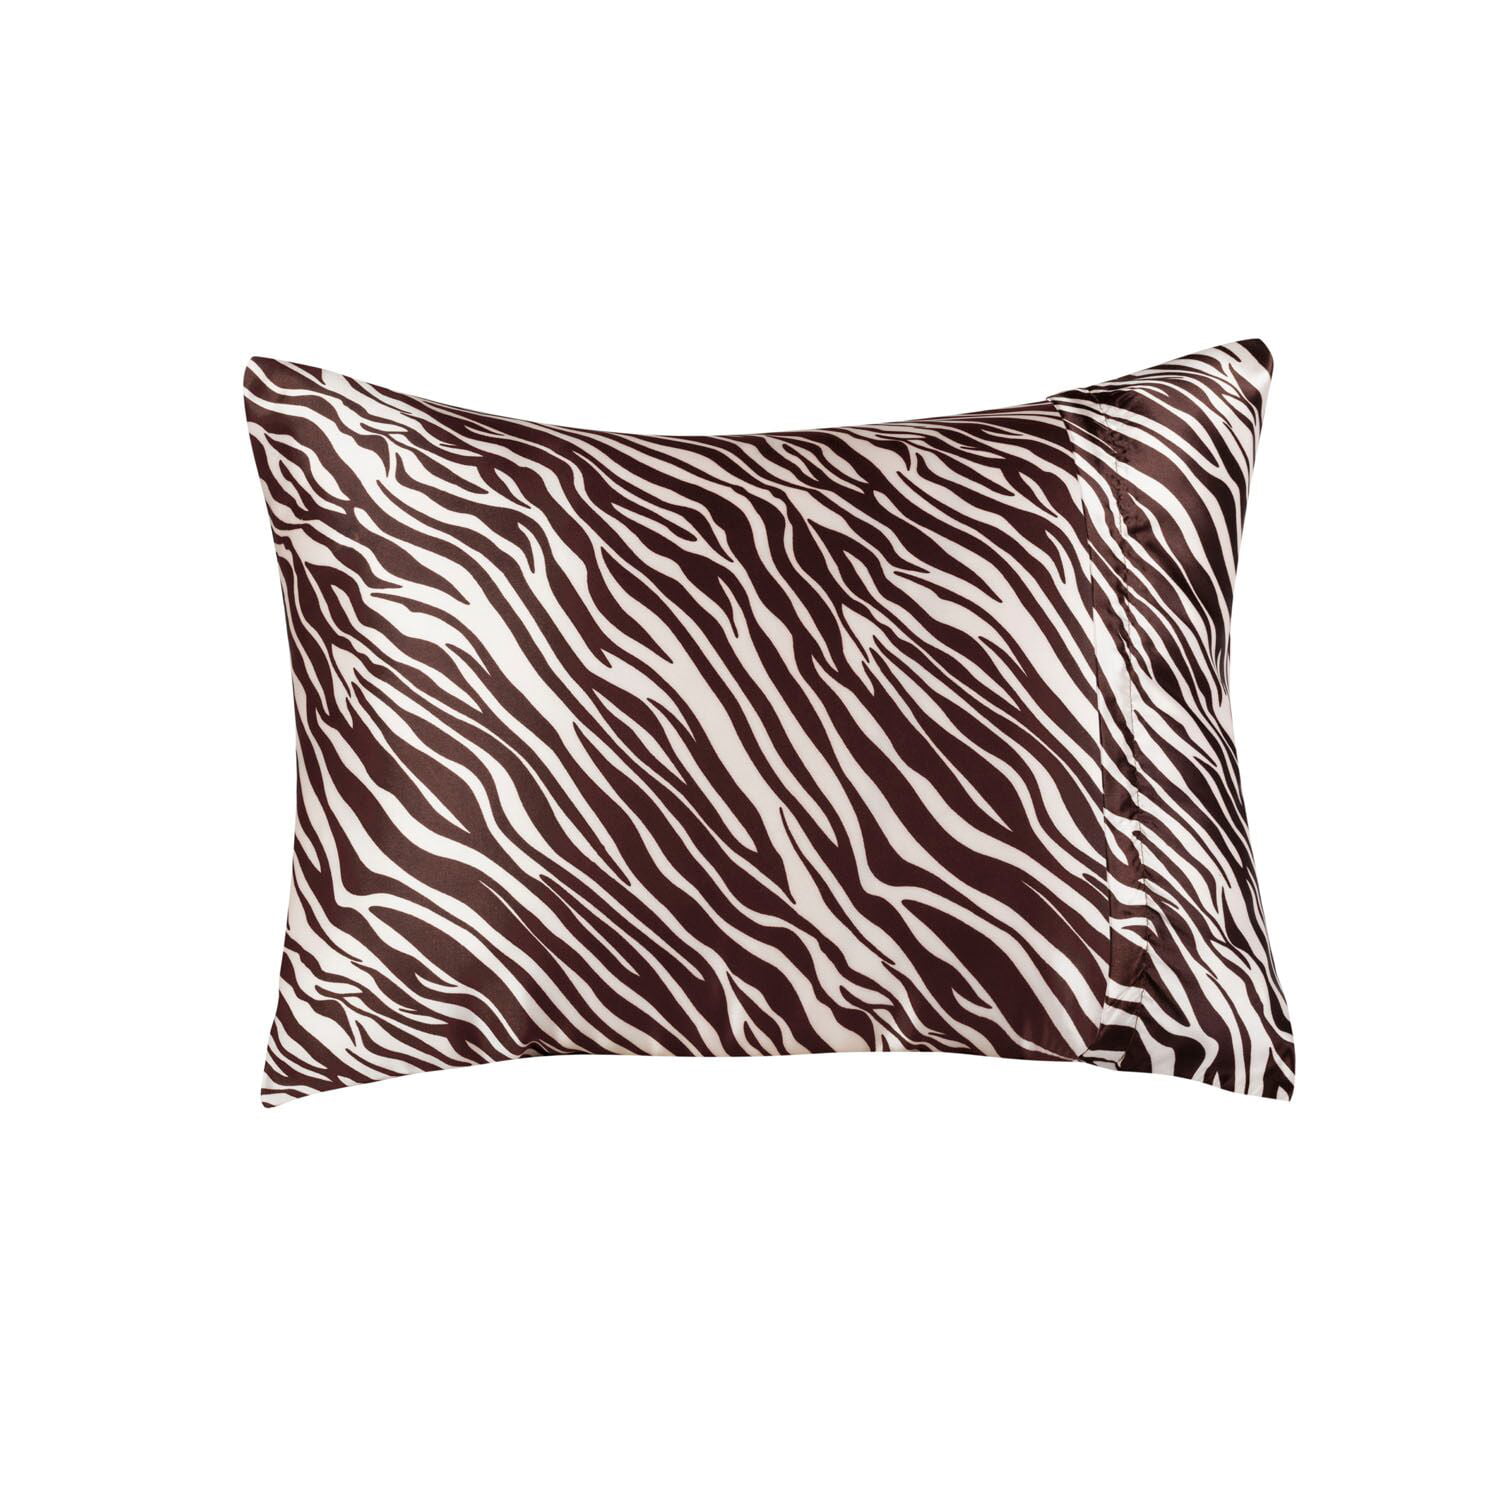 Sage 1-Pack Shop Bedding Luxury Satin Pillowcase for Hair Satin Euro Pillow Case Zippered,Blissford European